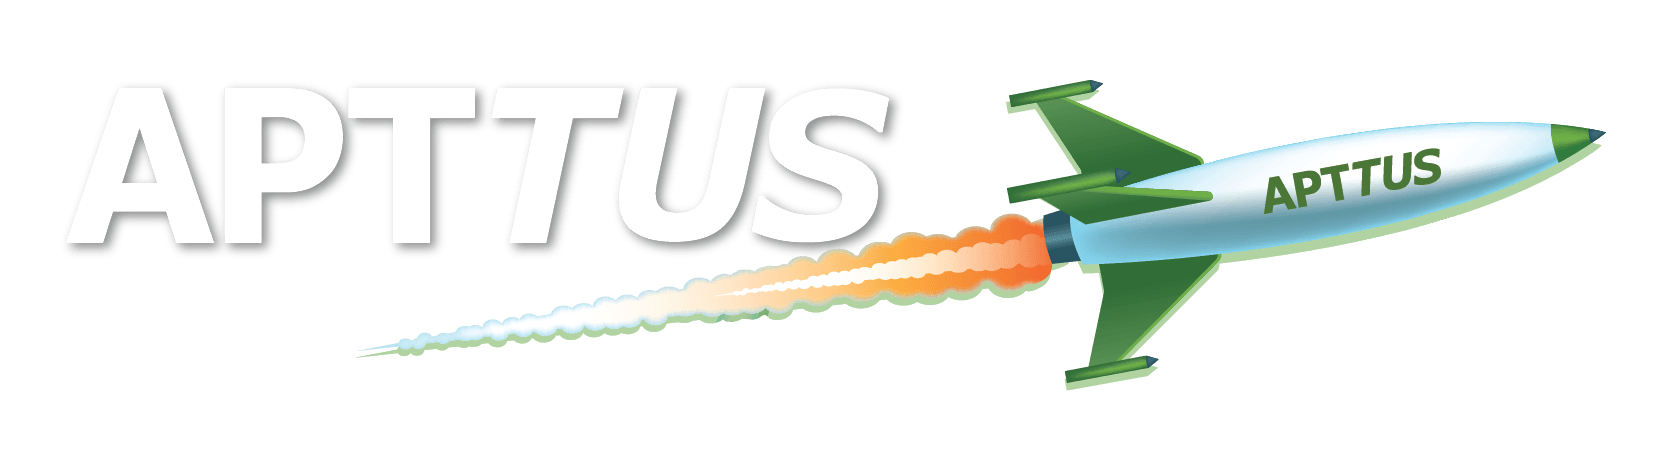 Apttus Logo - Apttus Demo Feedback